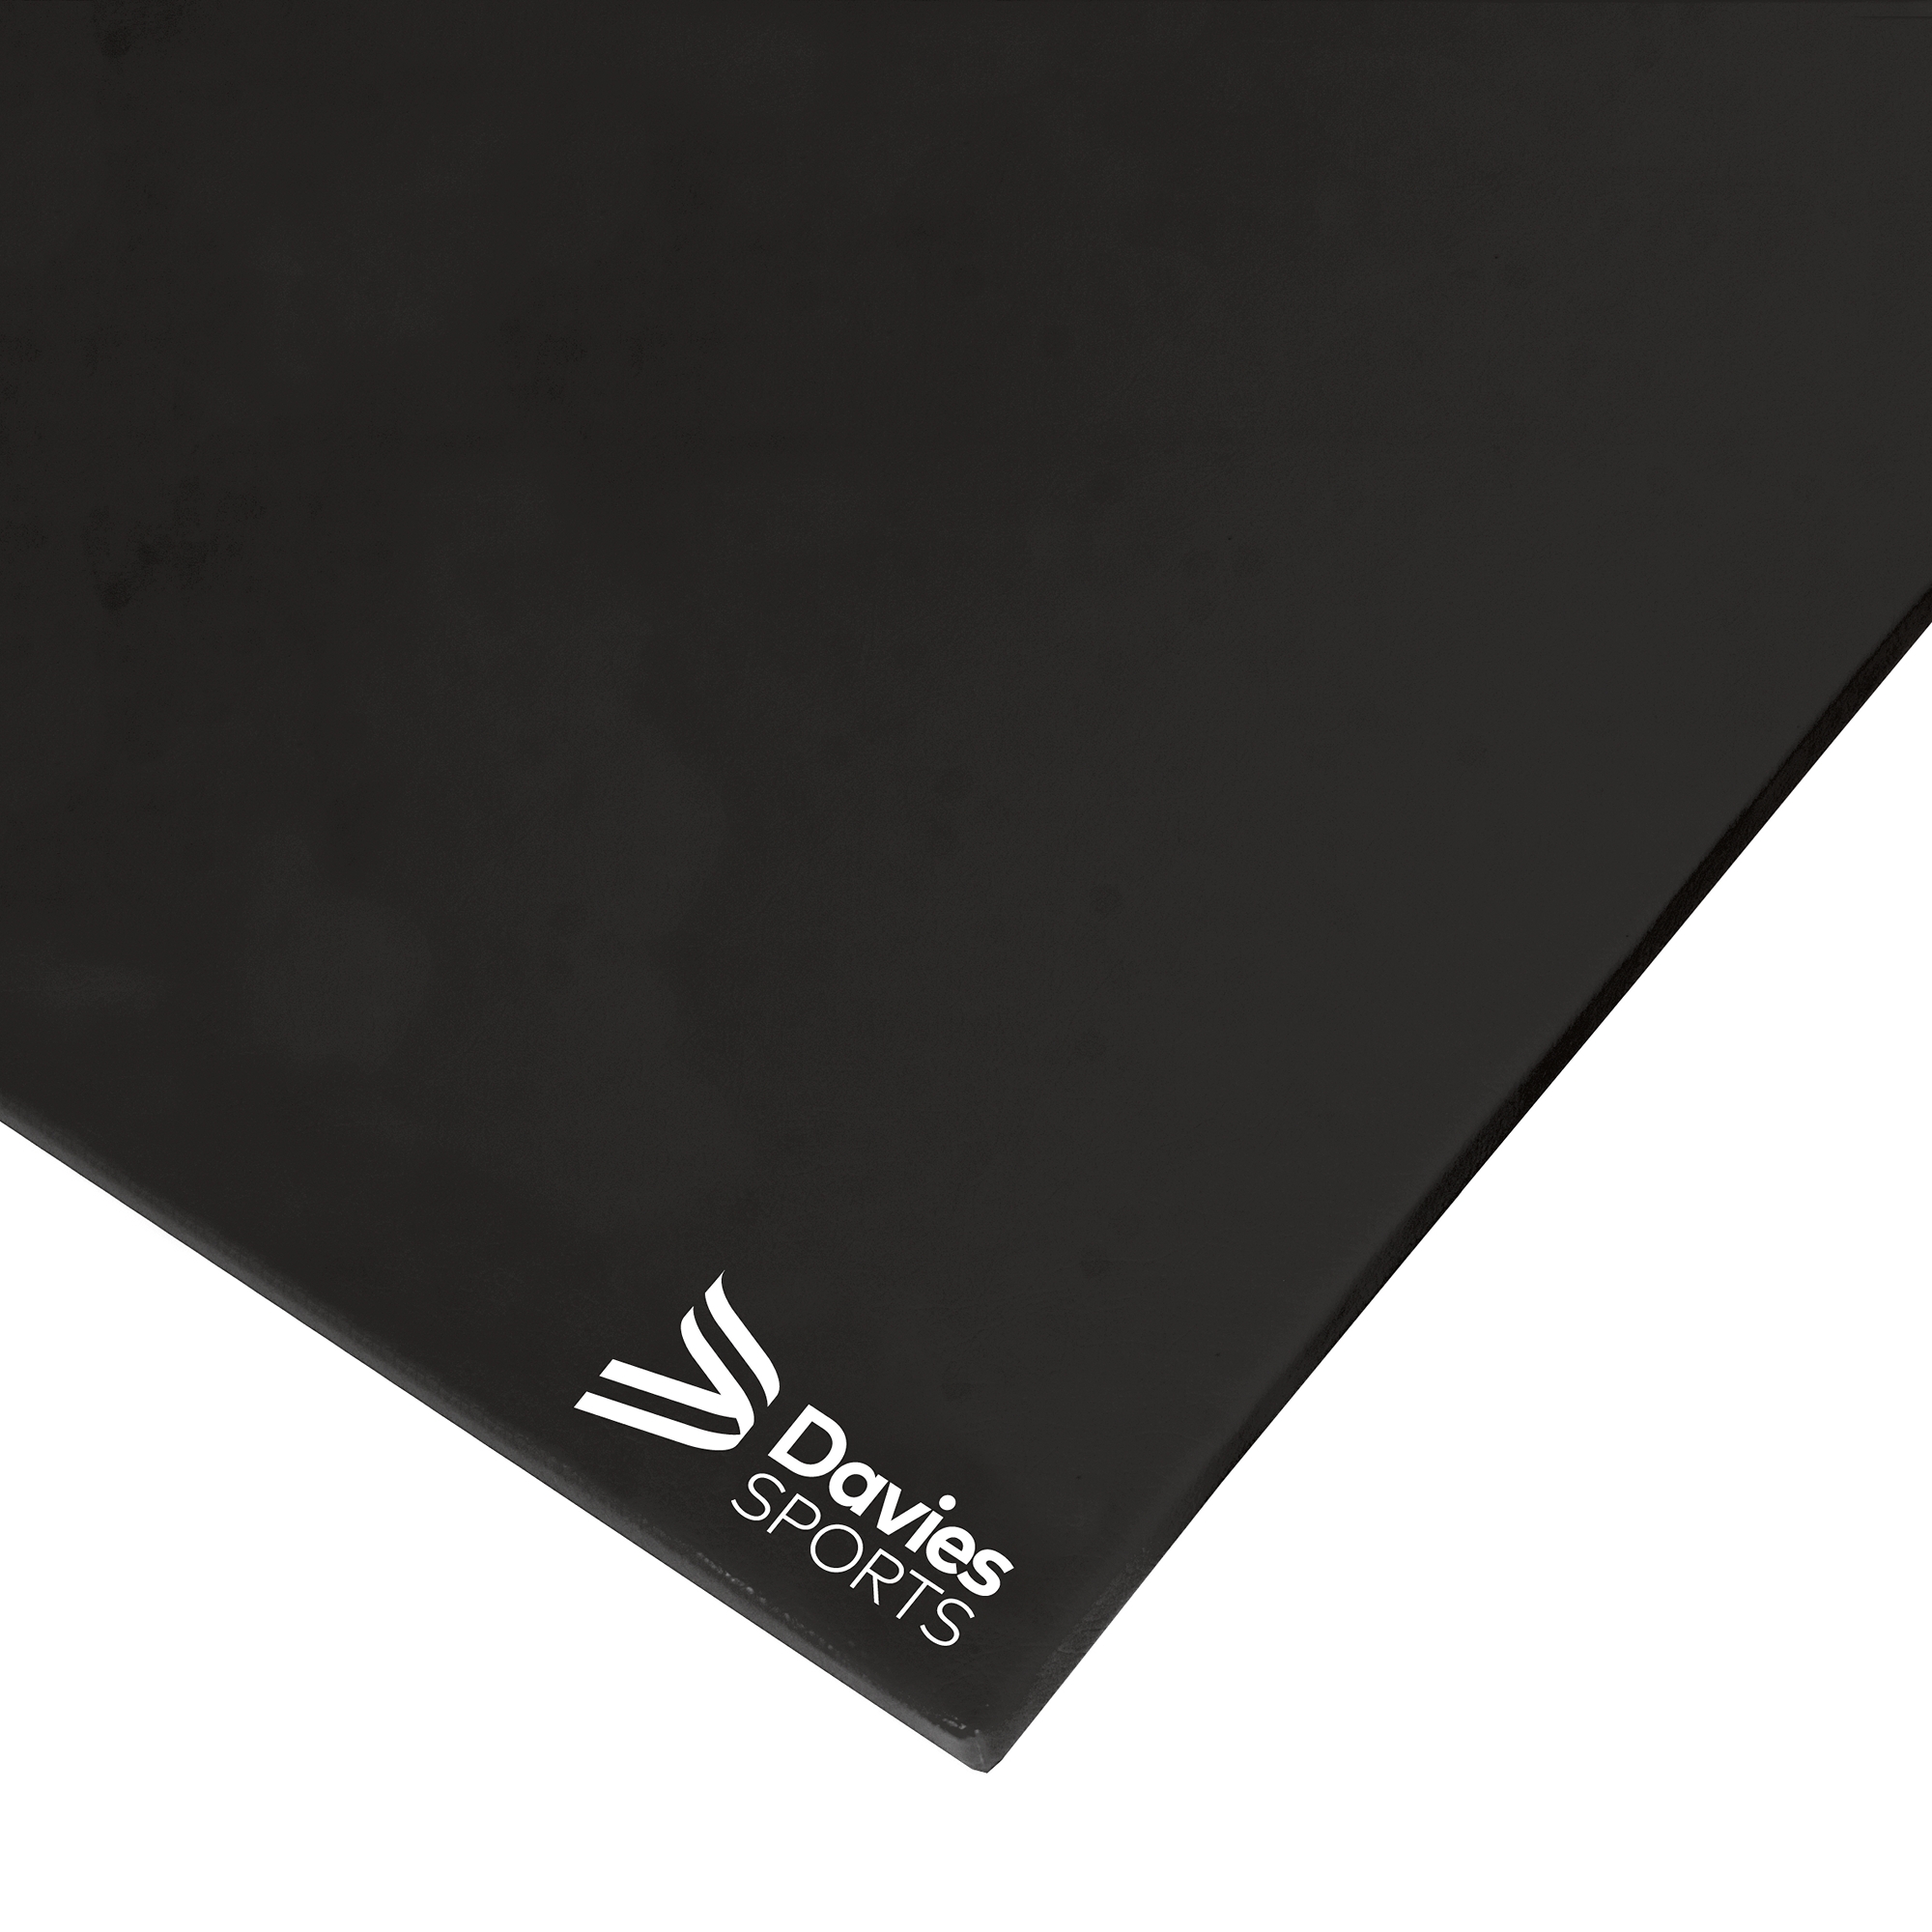 Davies Sports Medium Weight Gym Mat Standard Black - 1.22m x 0.91m x 25mm